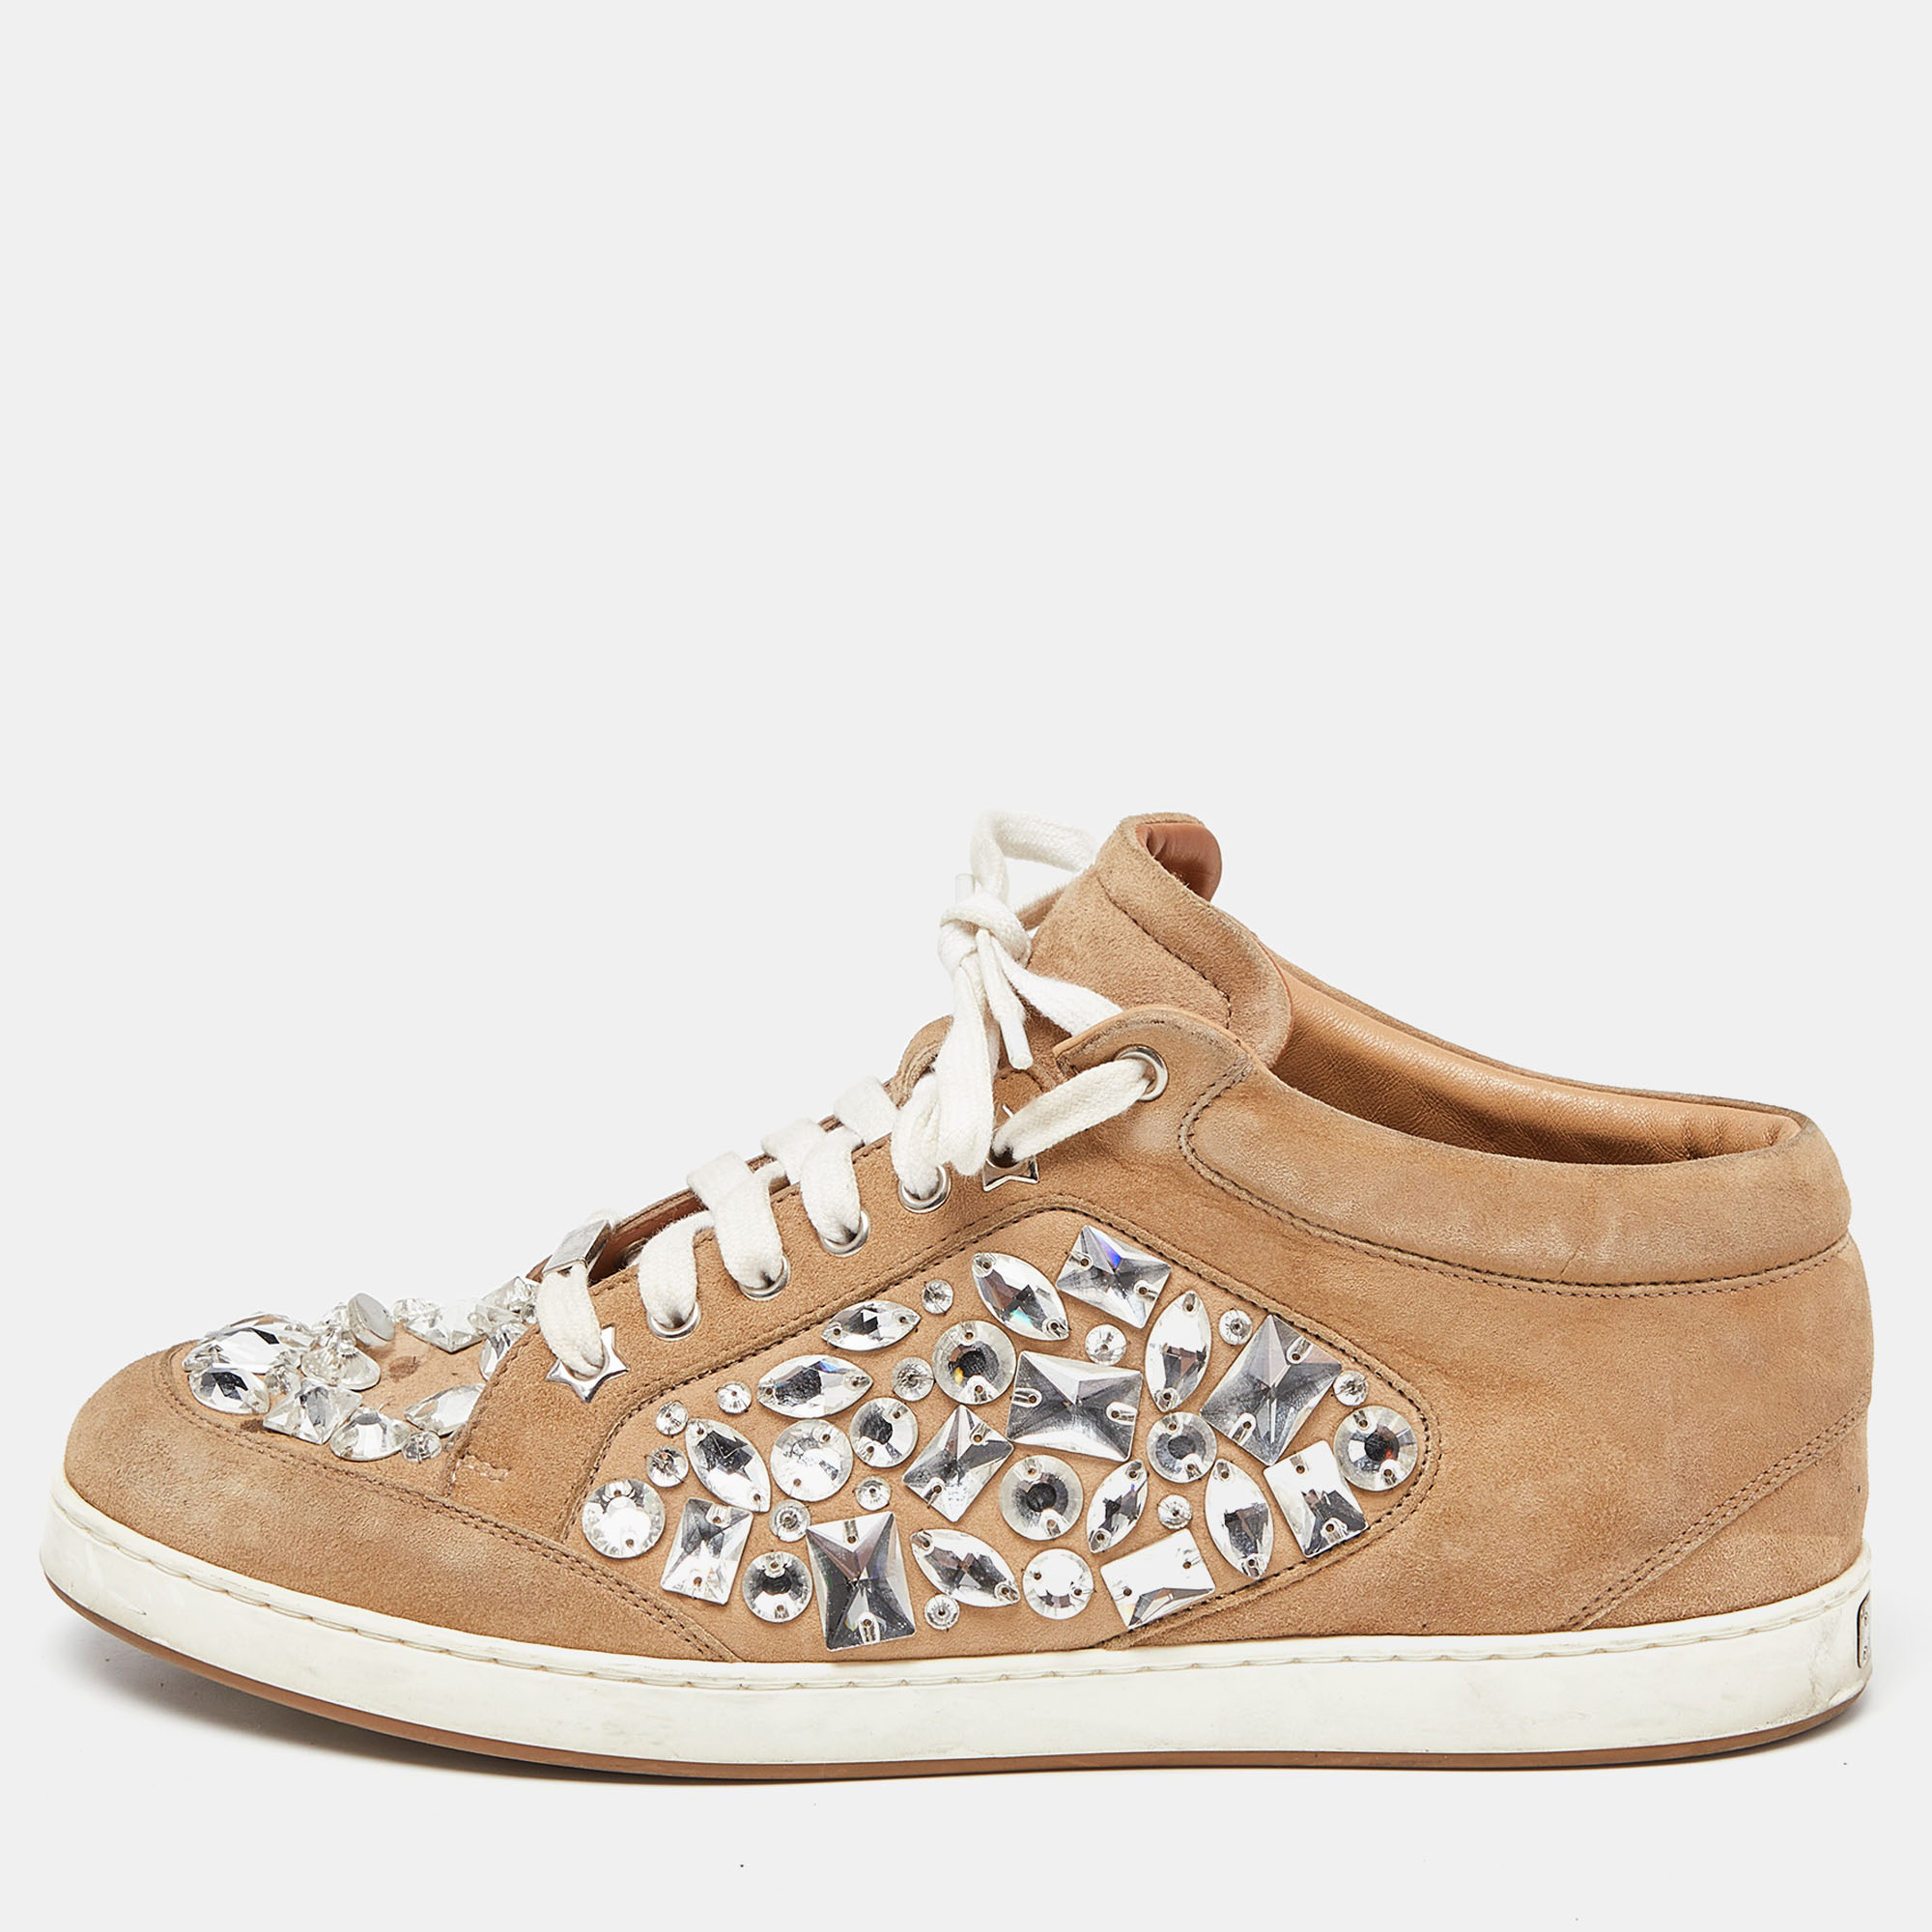 Jimmy choo beige suede miami crystal embellished sneakers size 41